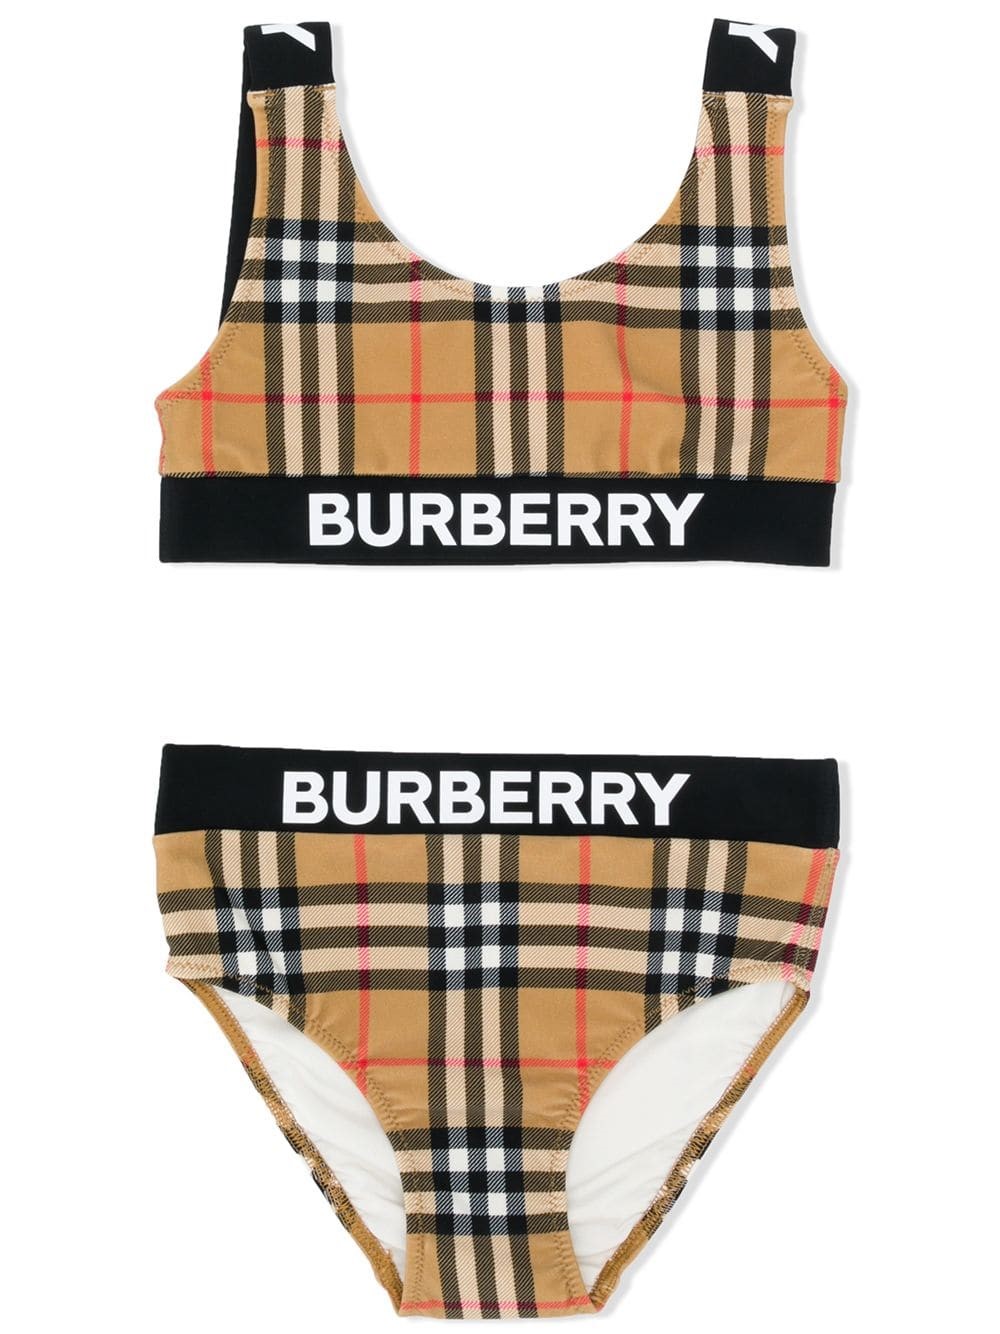 burberry swimwear outlet